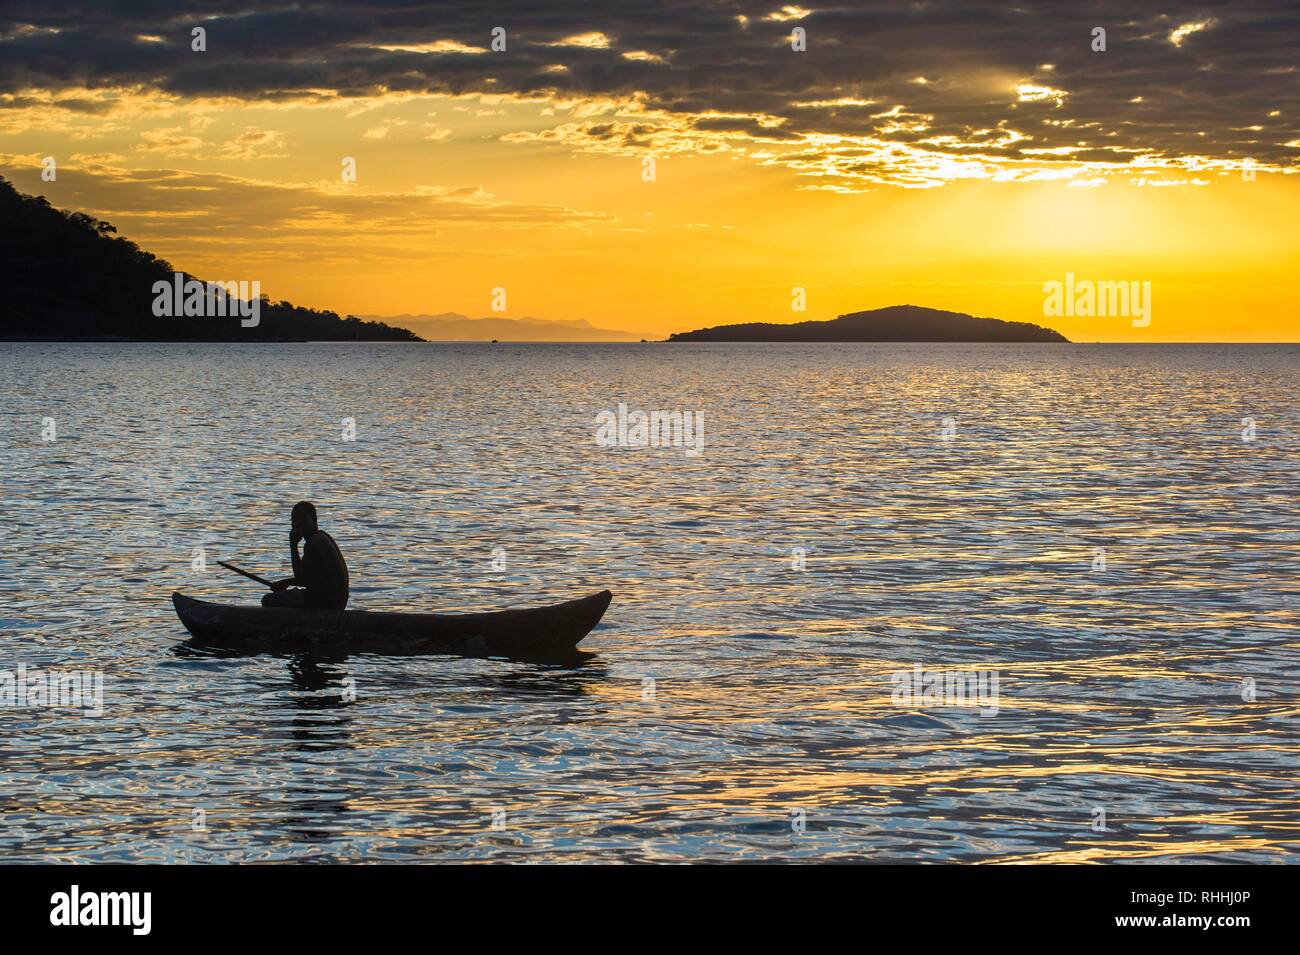 Man in a little fishing boat at sunset, Lake Malawi, Cape Maclear, Malawi Stock Photo